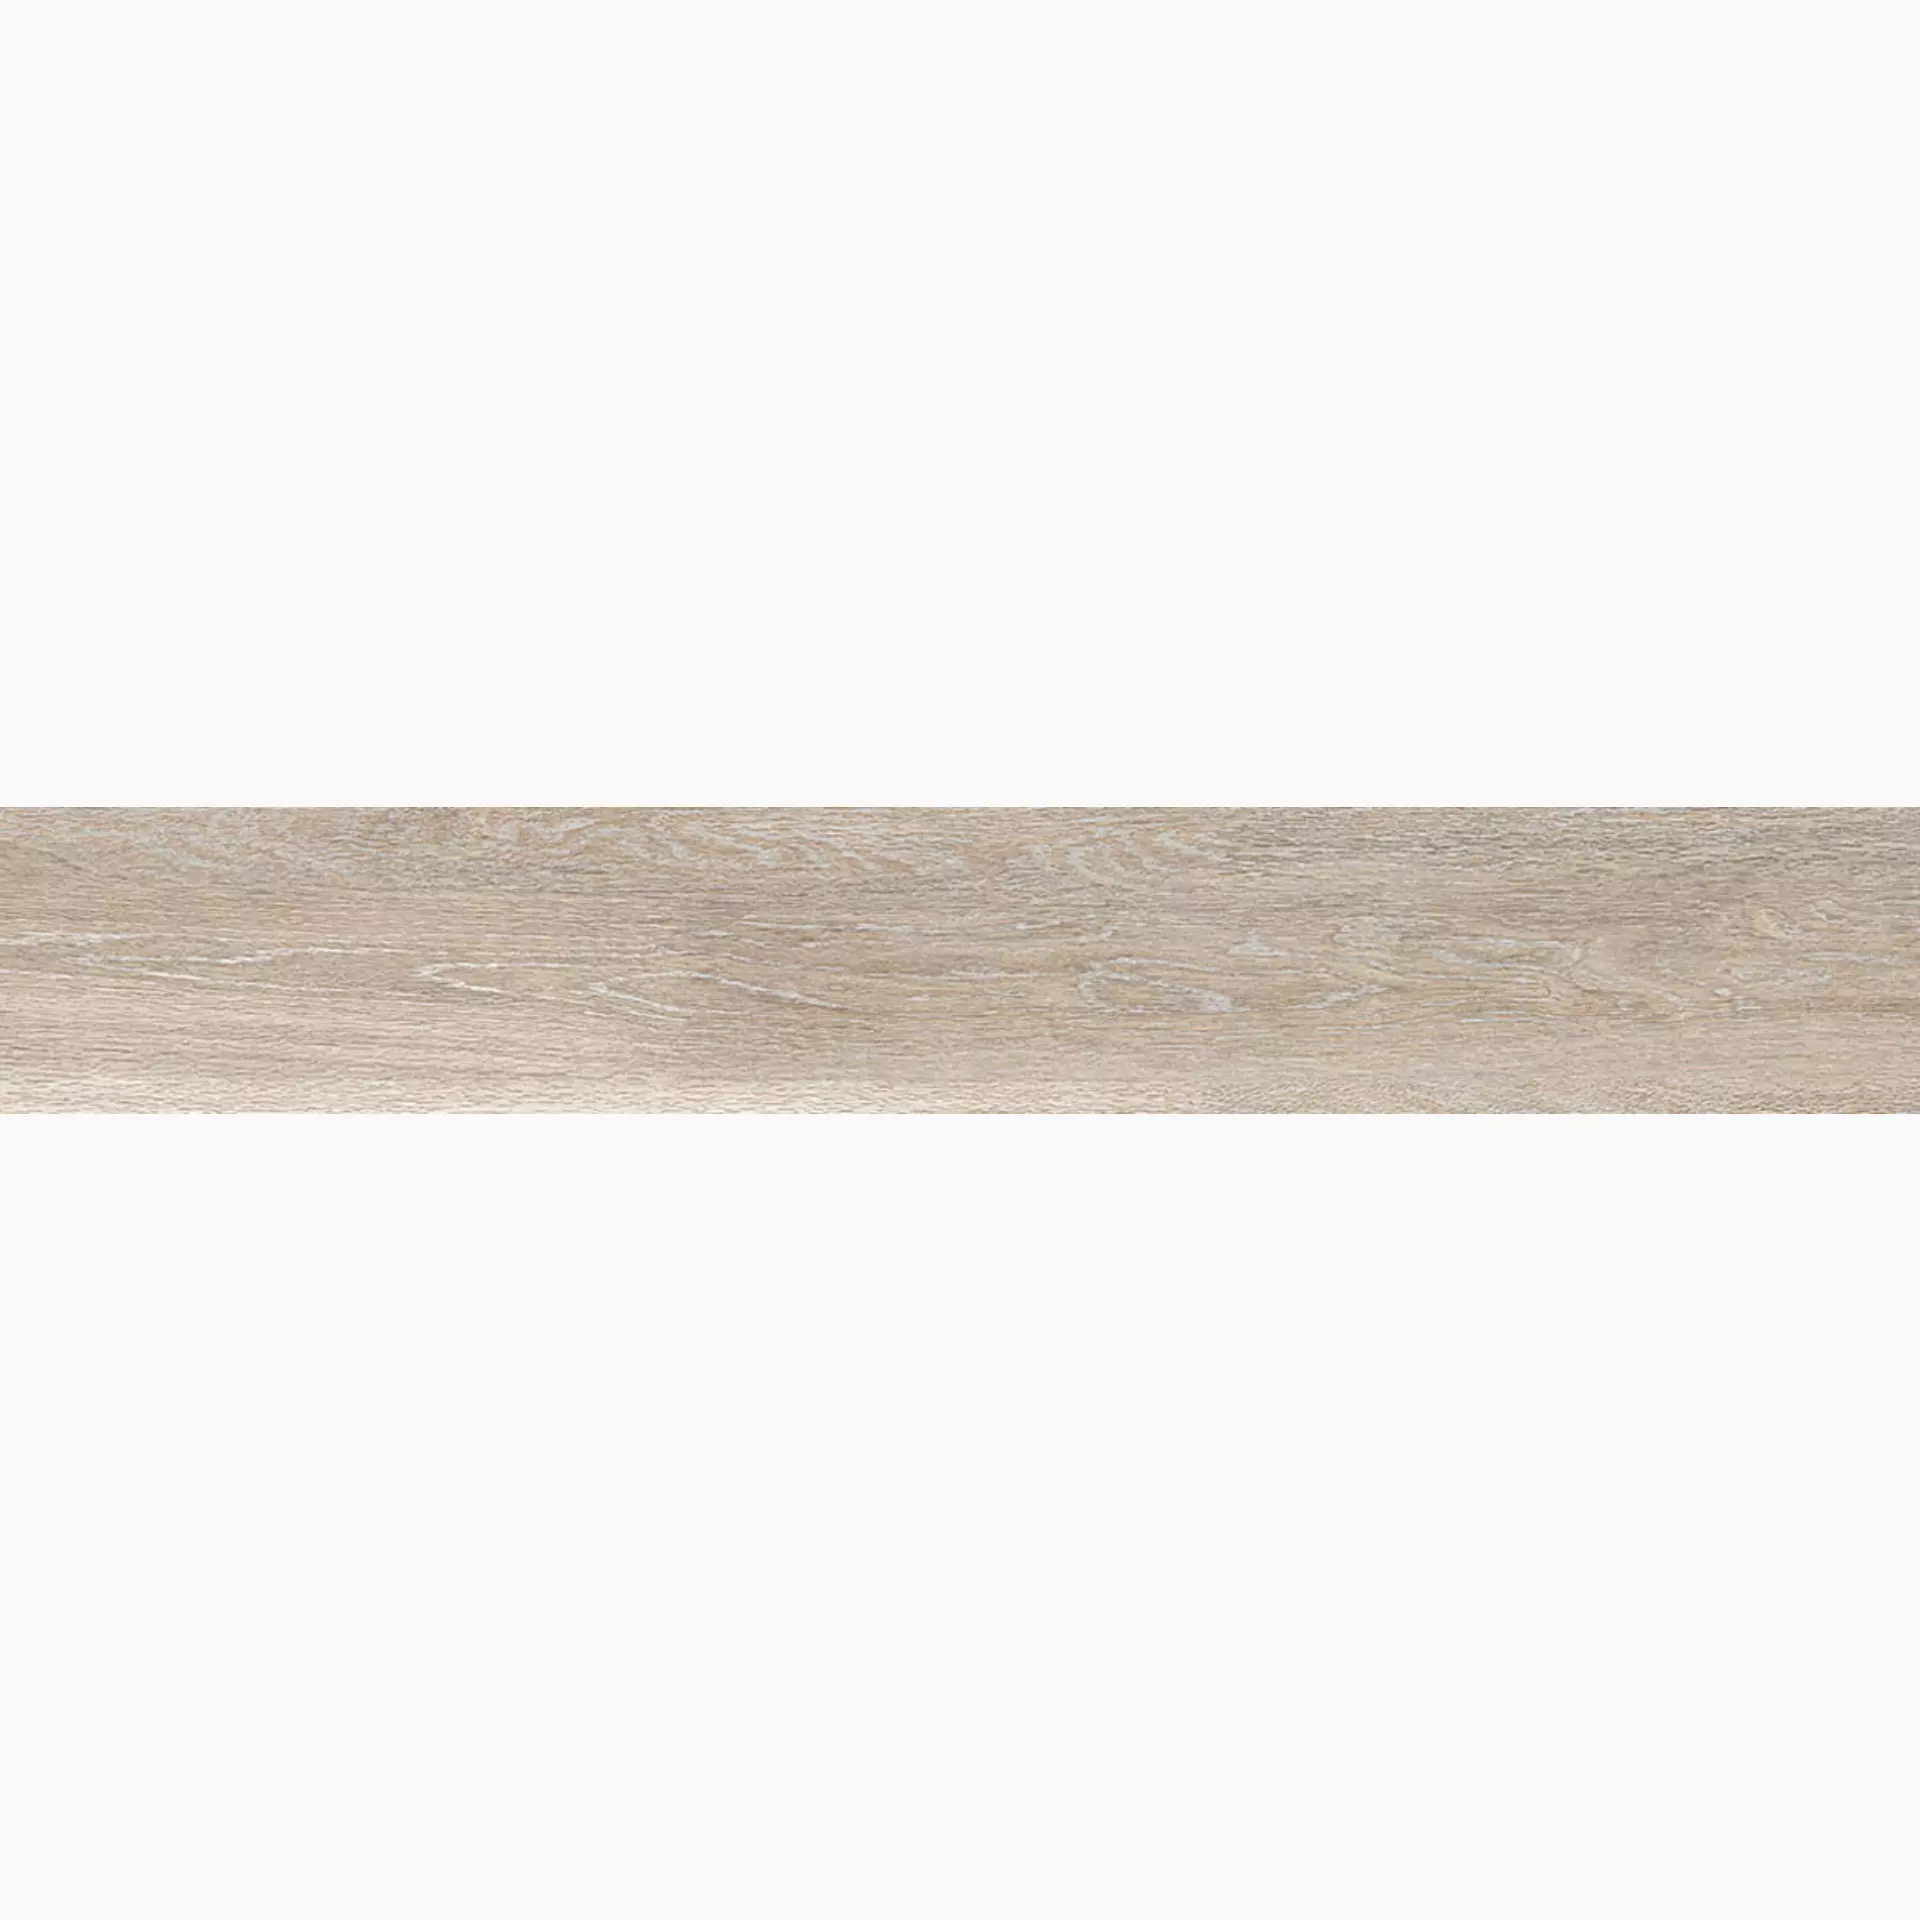 La Faenza Legno Beige Natural Slate Cut Matt 168054 20x120cm rectified 10mm - LEGNO 2012B RM